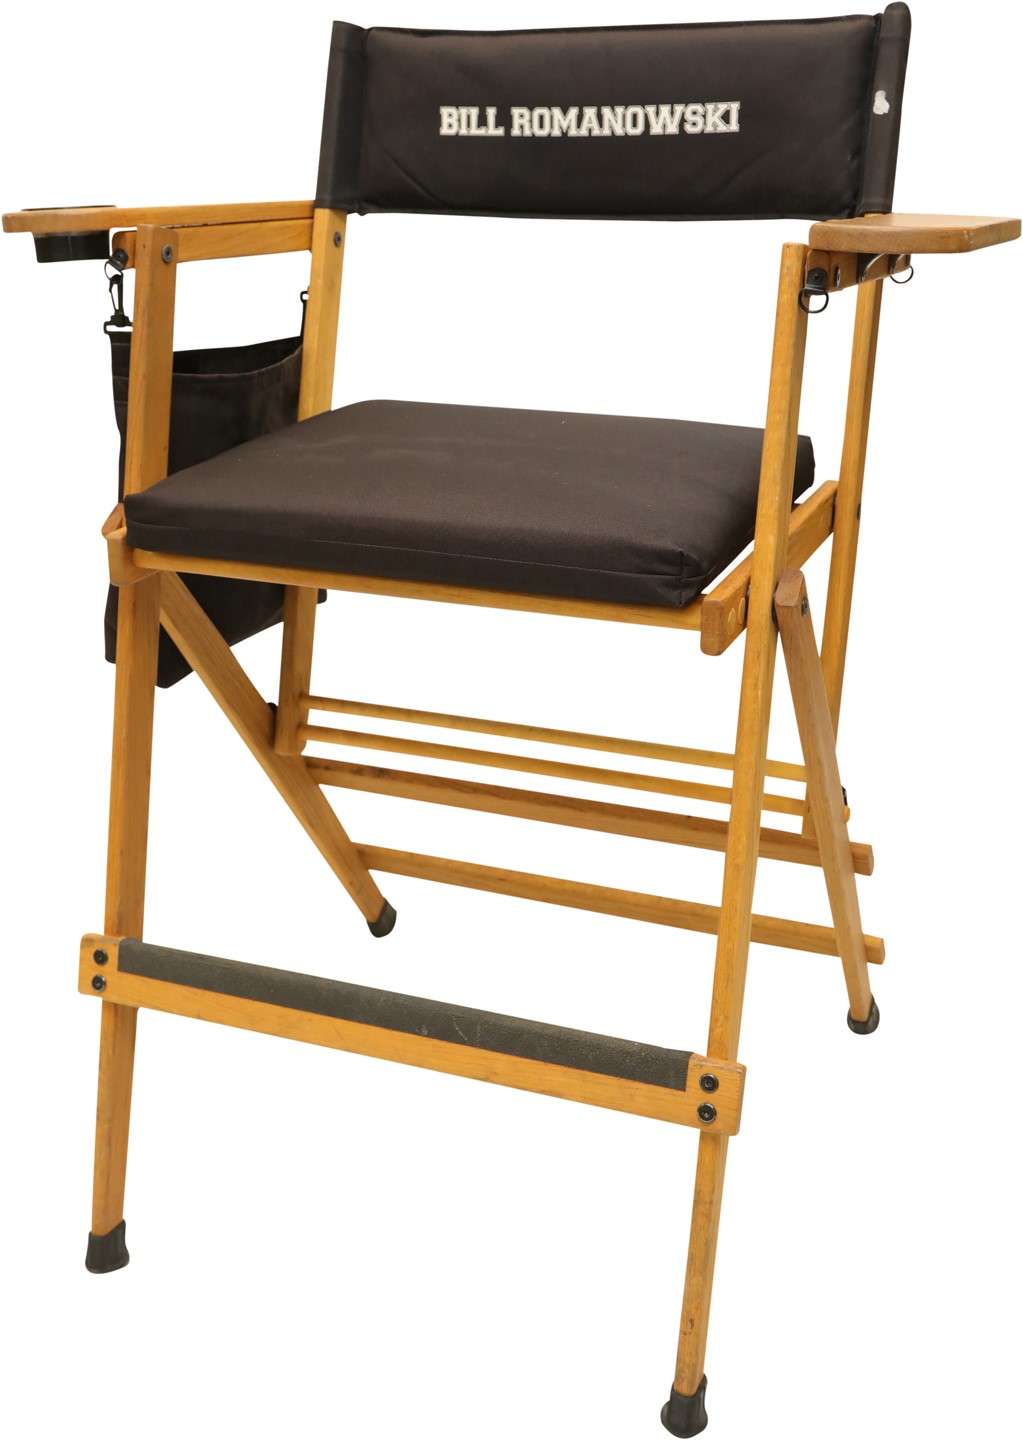 - Bill Romanowski's Longest Yard Movie Set Chair